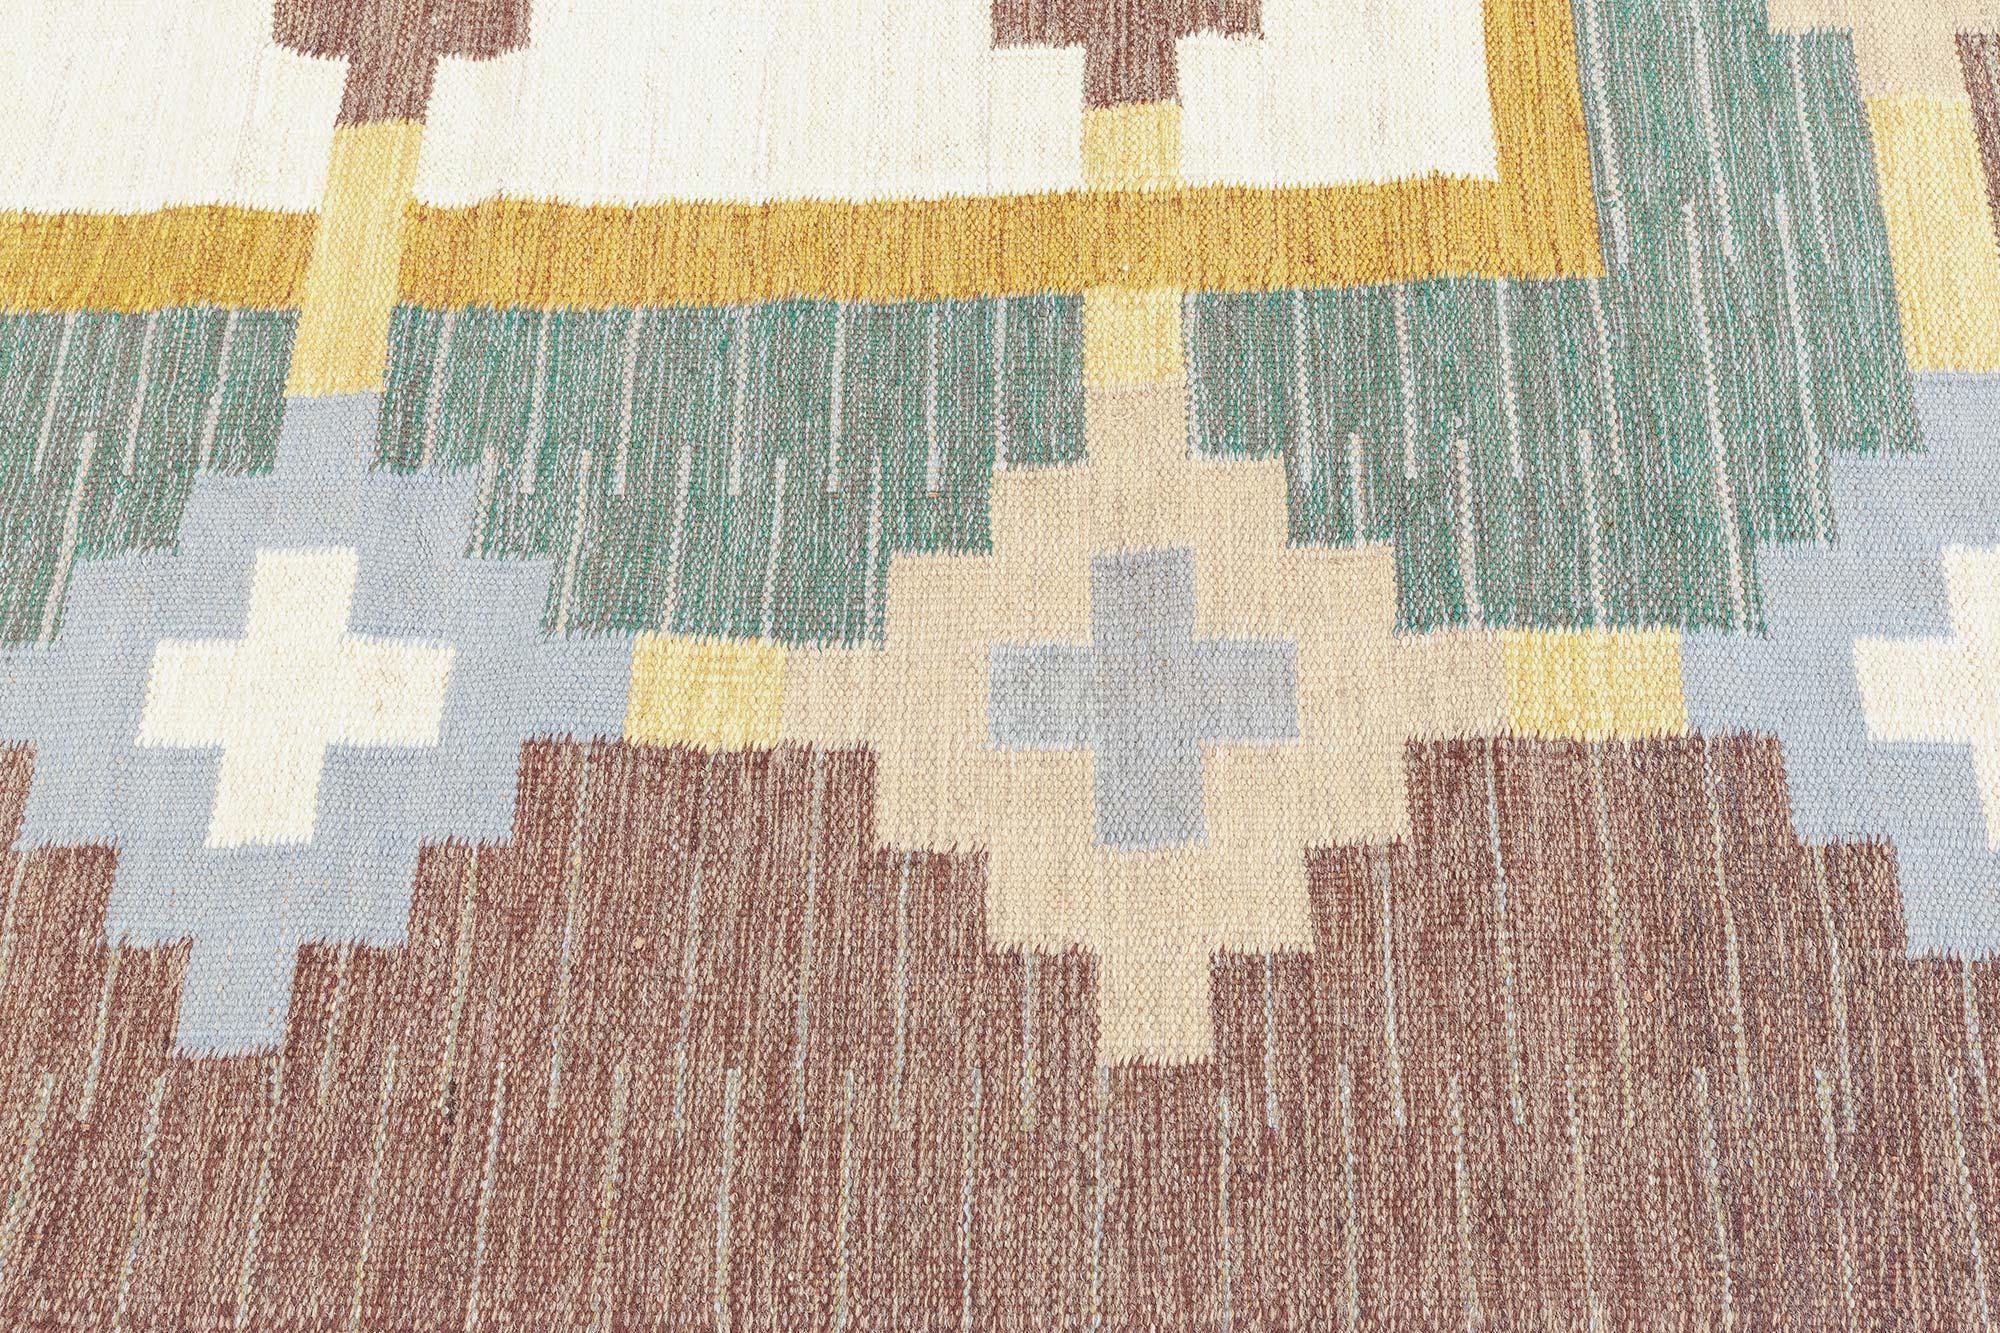 Midcentury Swedish geometric brown, green flat-weave rug. Woven signature to edge 'GS'
Size: 5'10